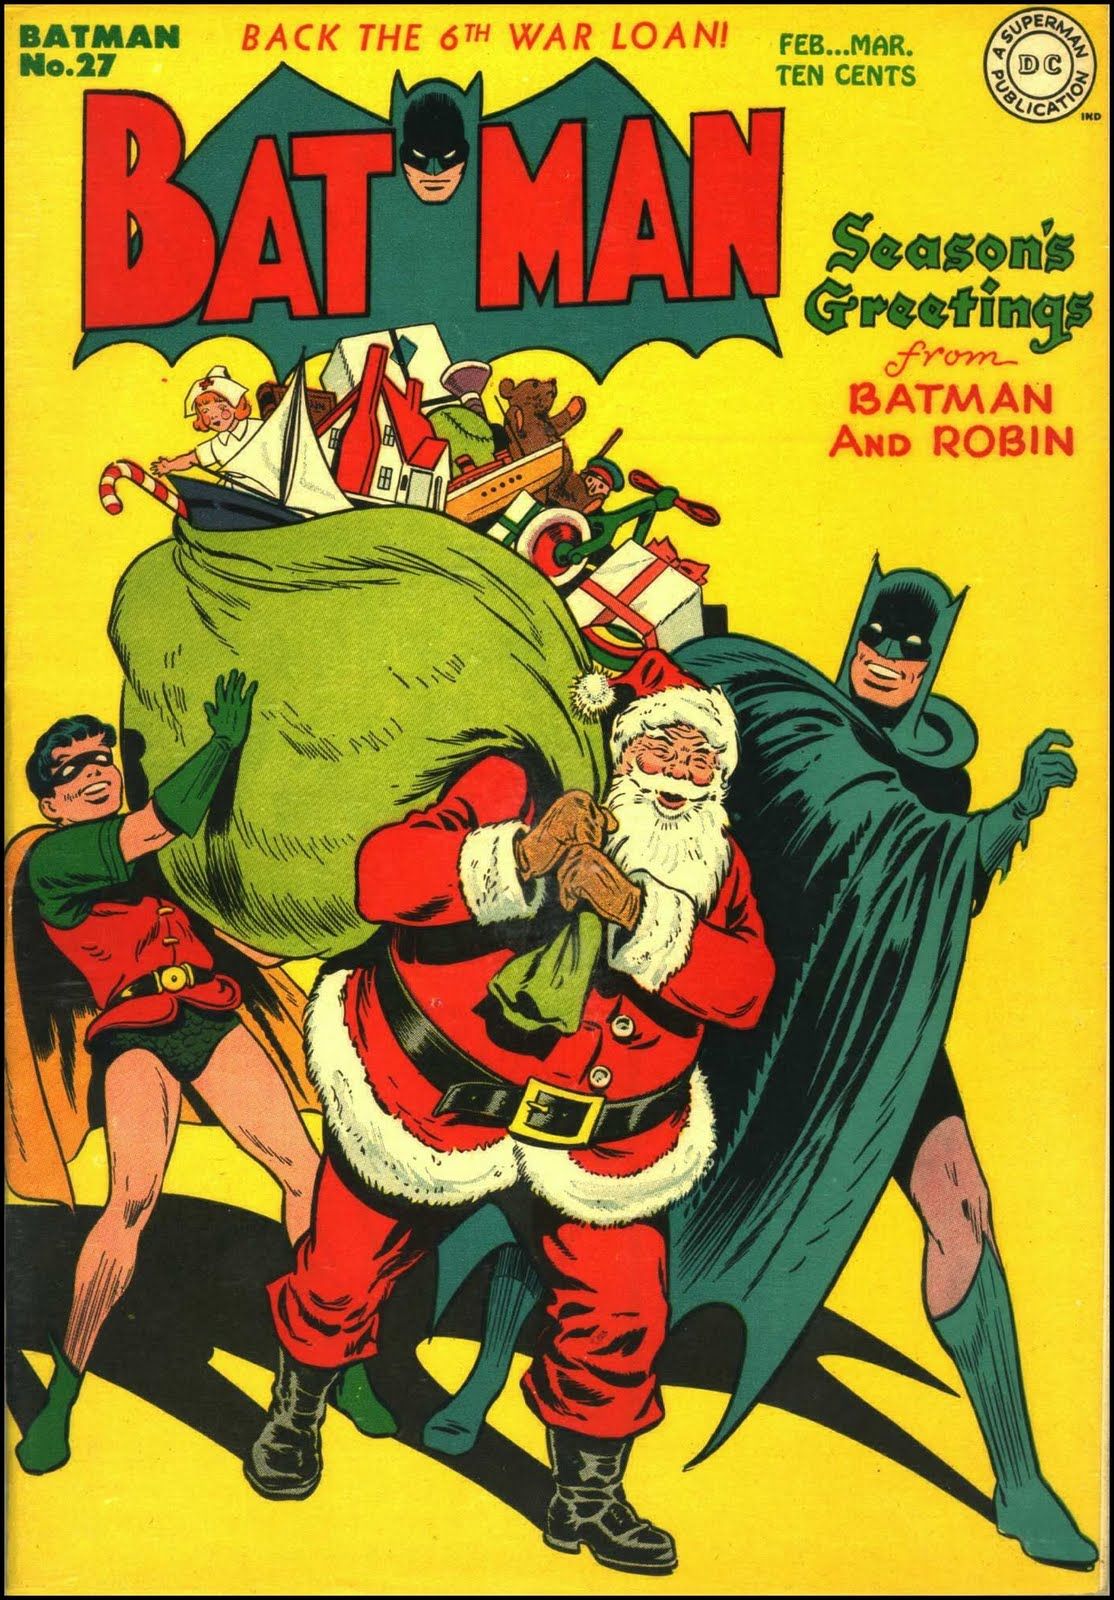 CHRISTMAS IN GOTHAM: BATMAN Advent Calendar Coming This Holiday Season